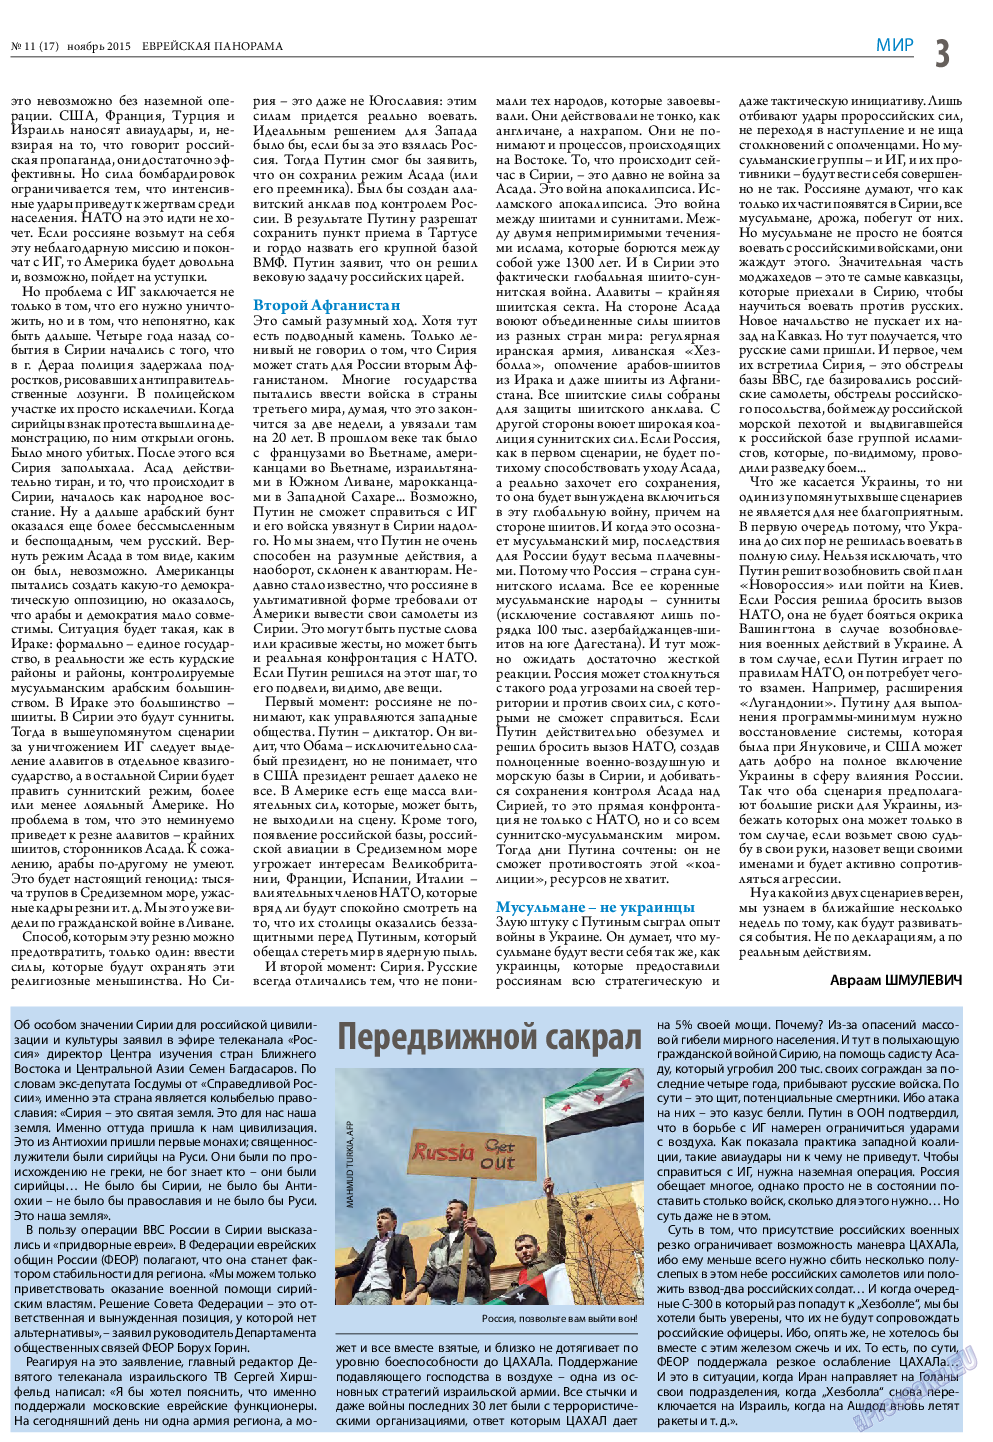 Еврейская панорама, газета. 2015 №11 стр.3